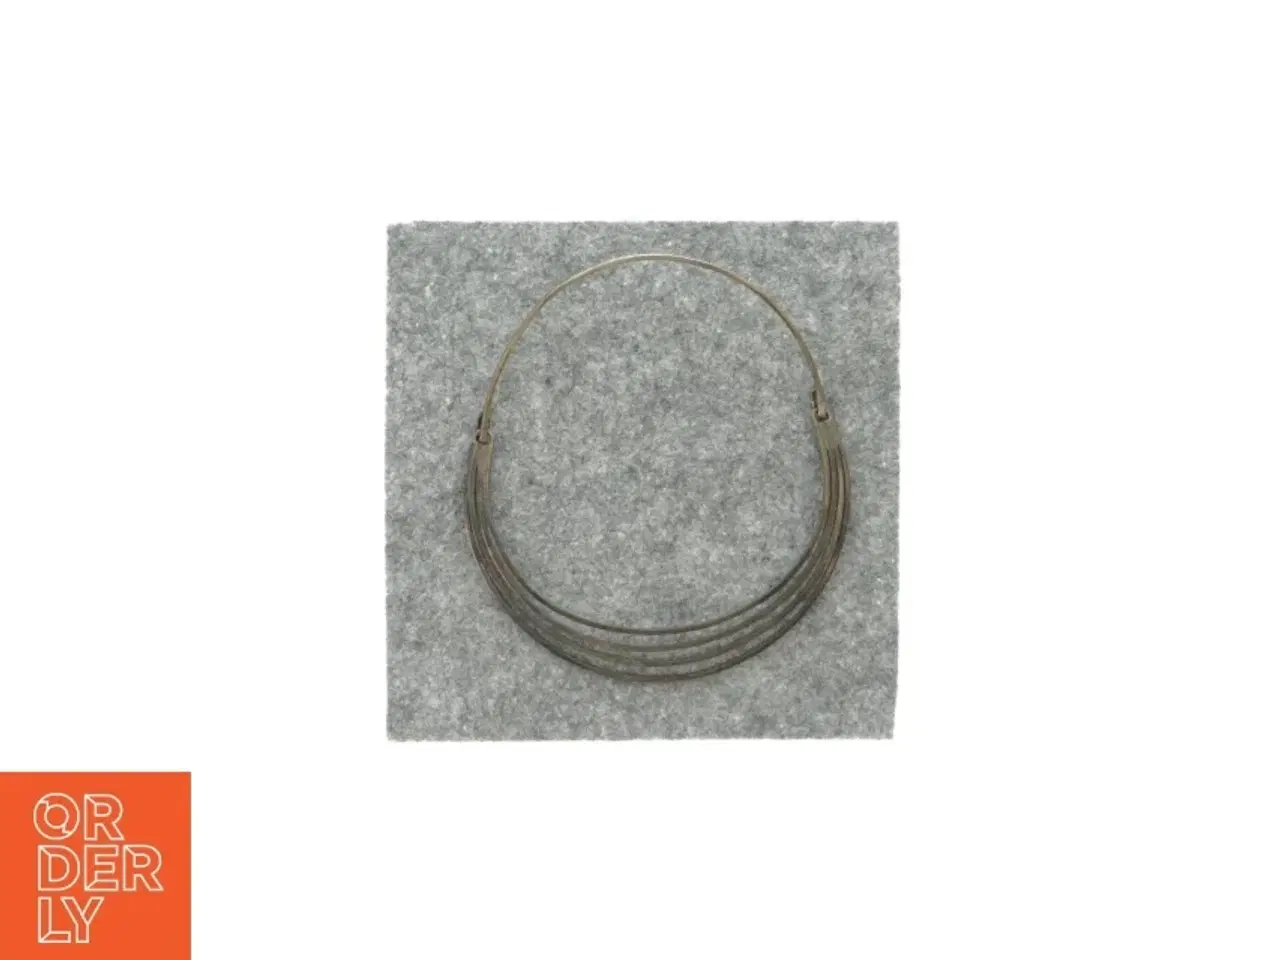 Billede 2 - Halssmykke i sølv, 13 centimeter i diameter